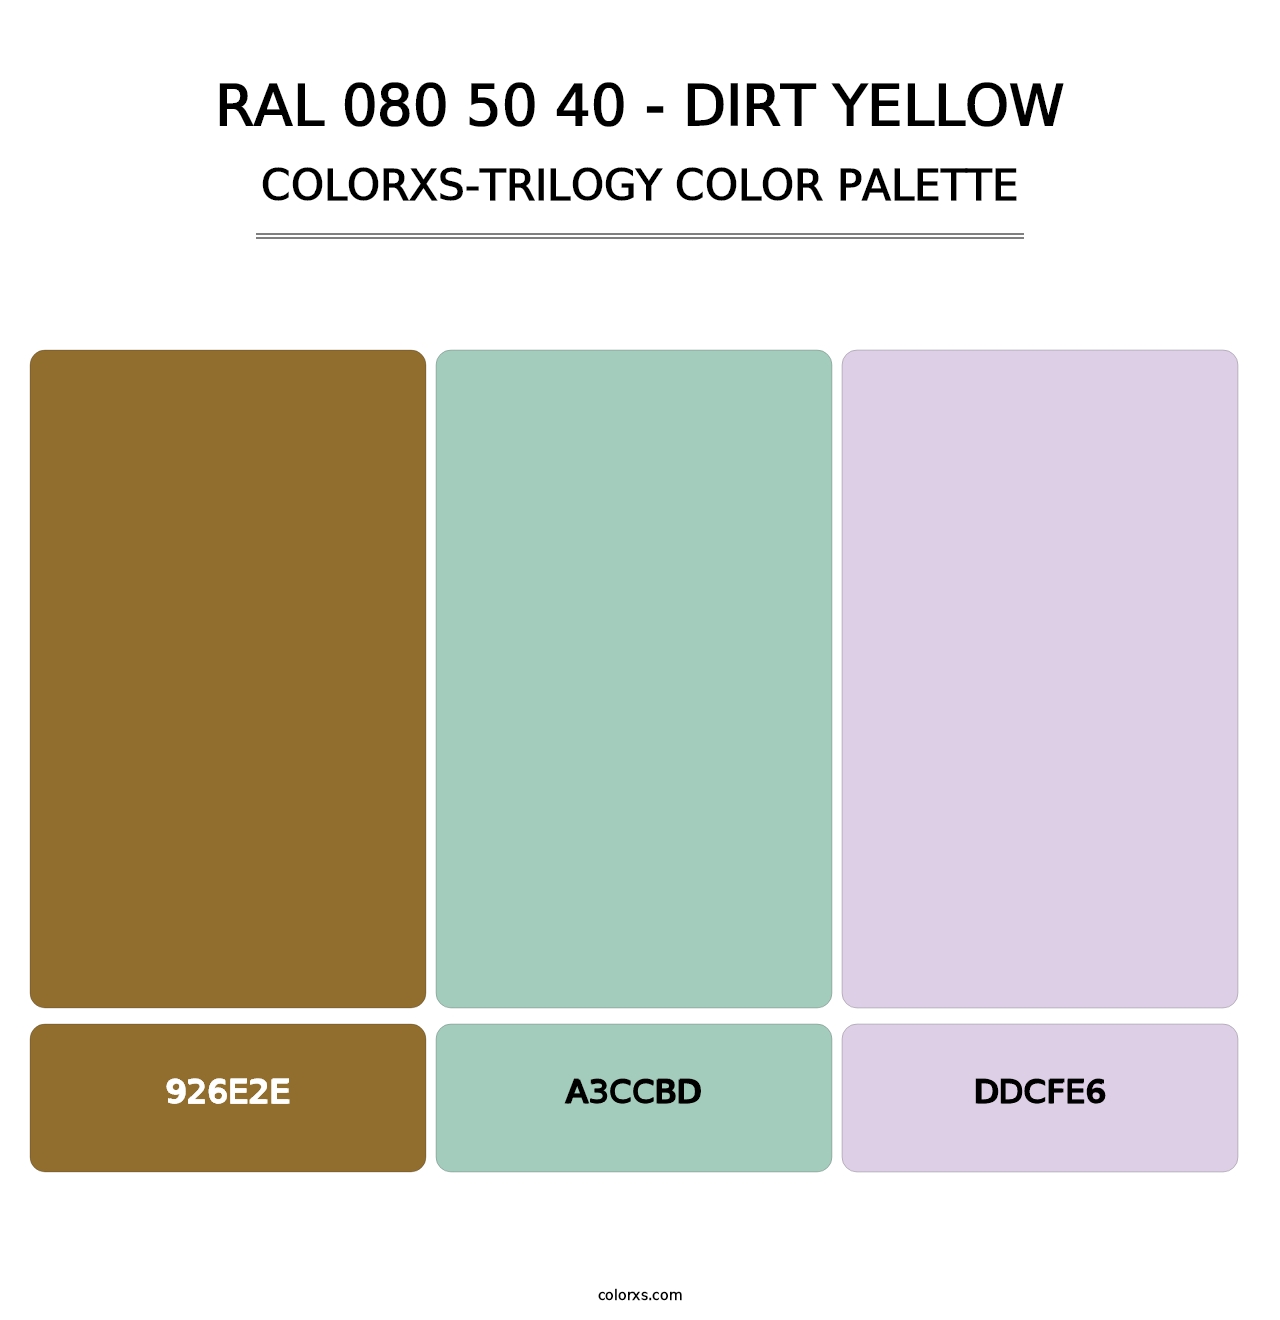 RAL 080 50 40 - Dirt Yellow - Colorxs Trilogy Palette